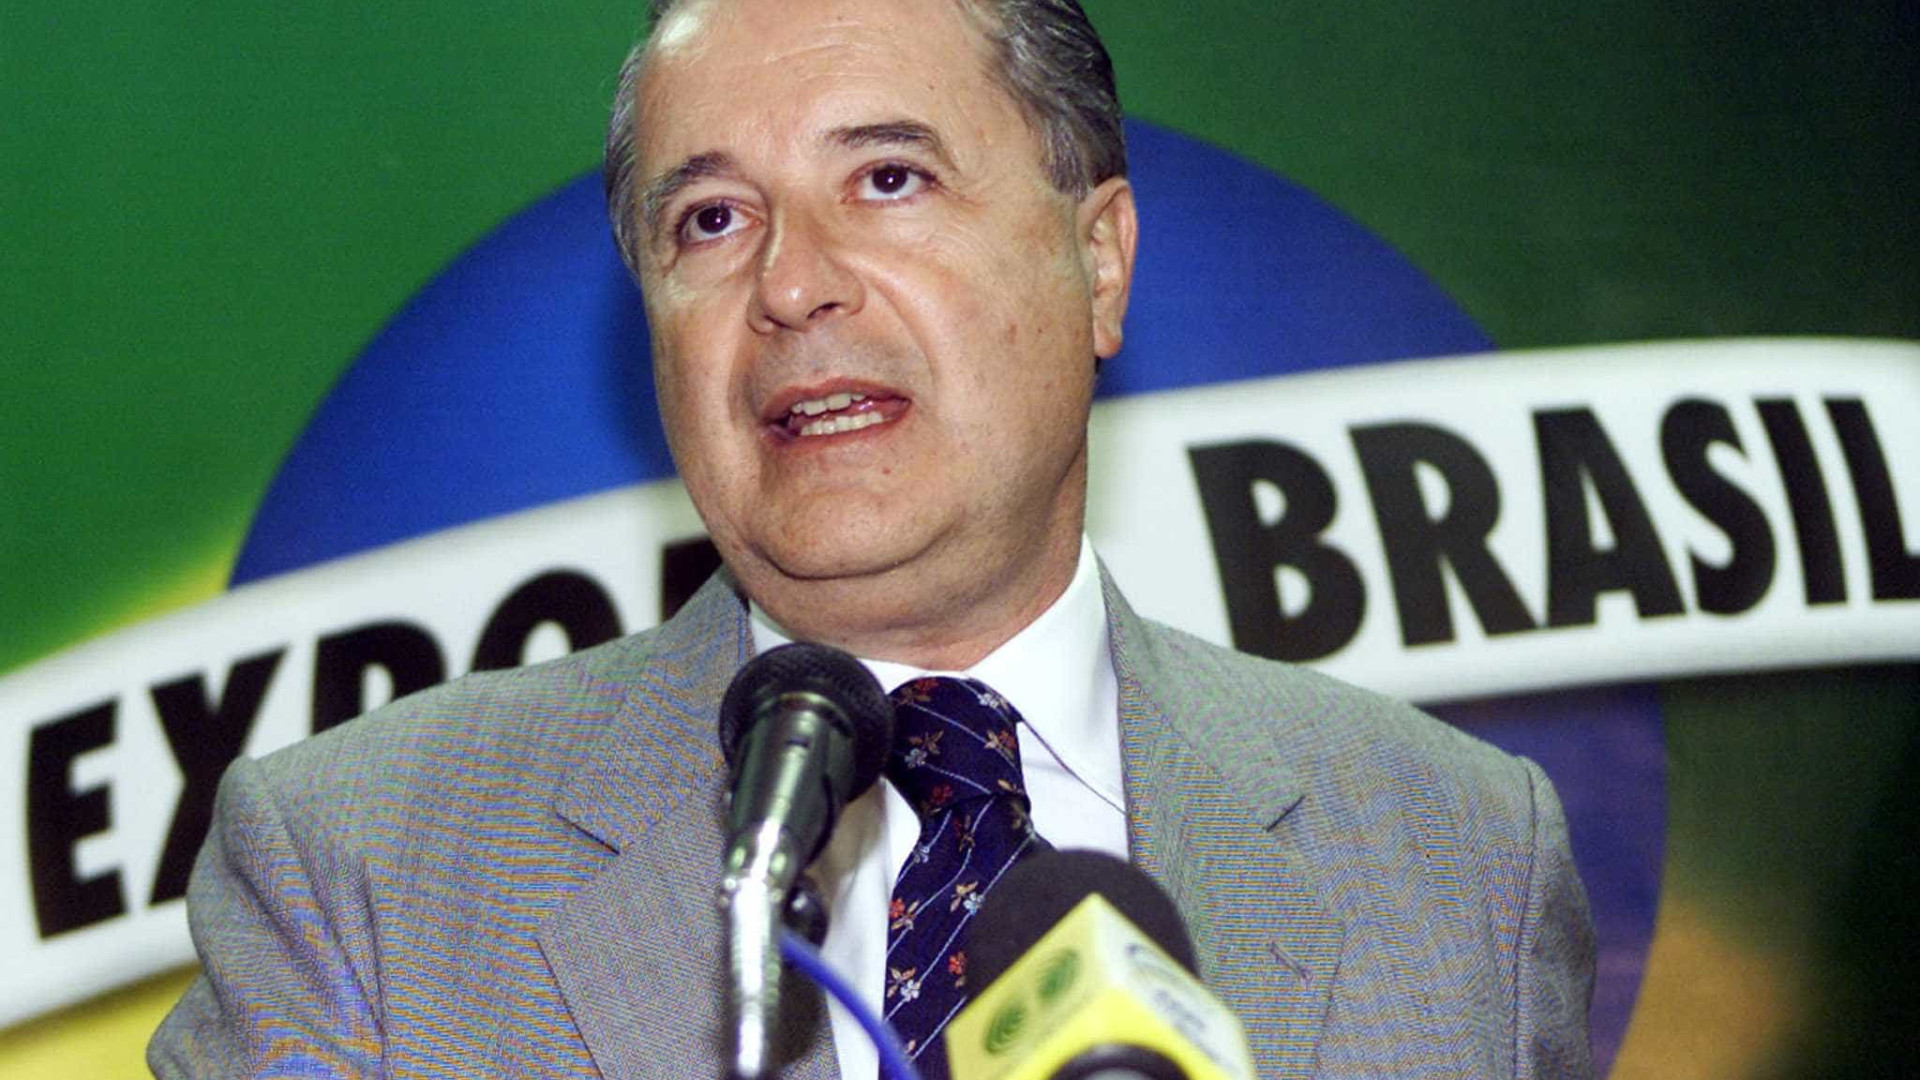 Paulo Sérgio Amaral